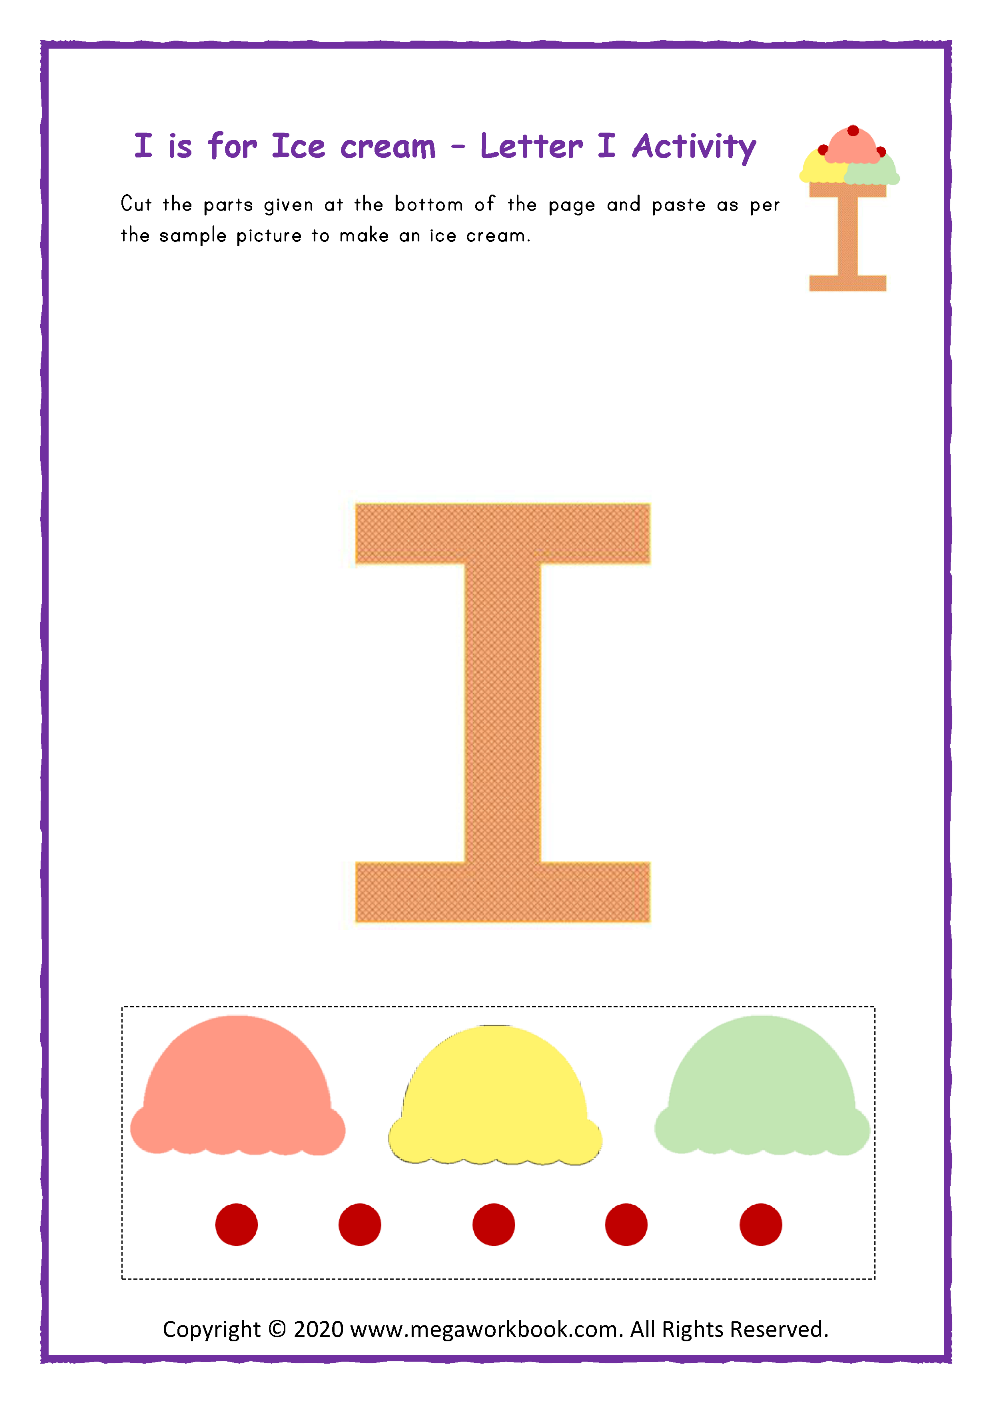 Letter I Worksheets - Letter I Crafts - Letter I Activities For Throughout Letter I Template For Preschool